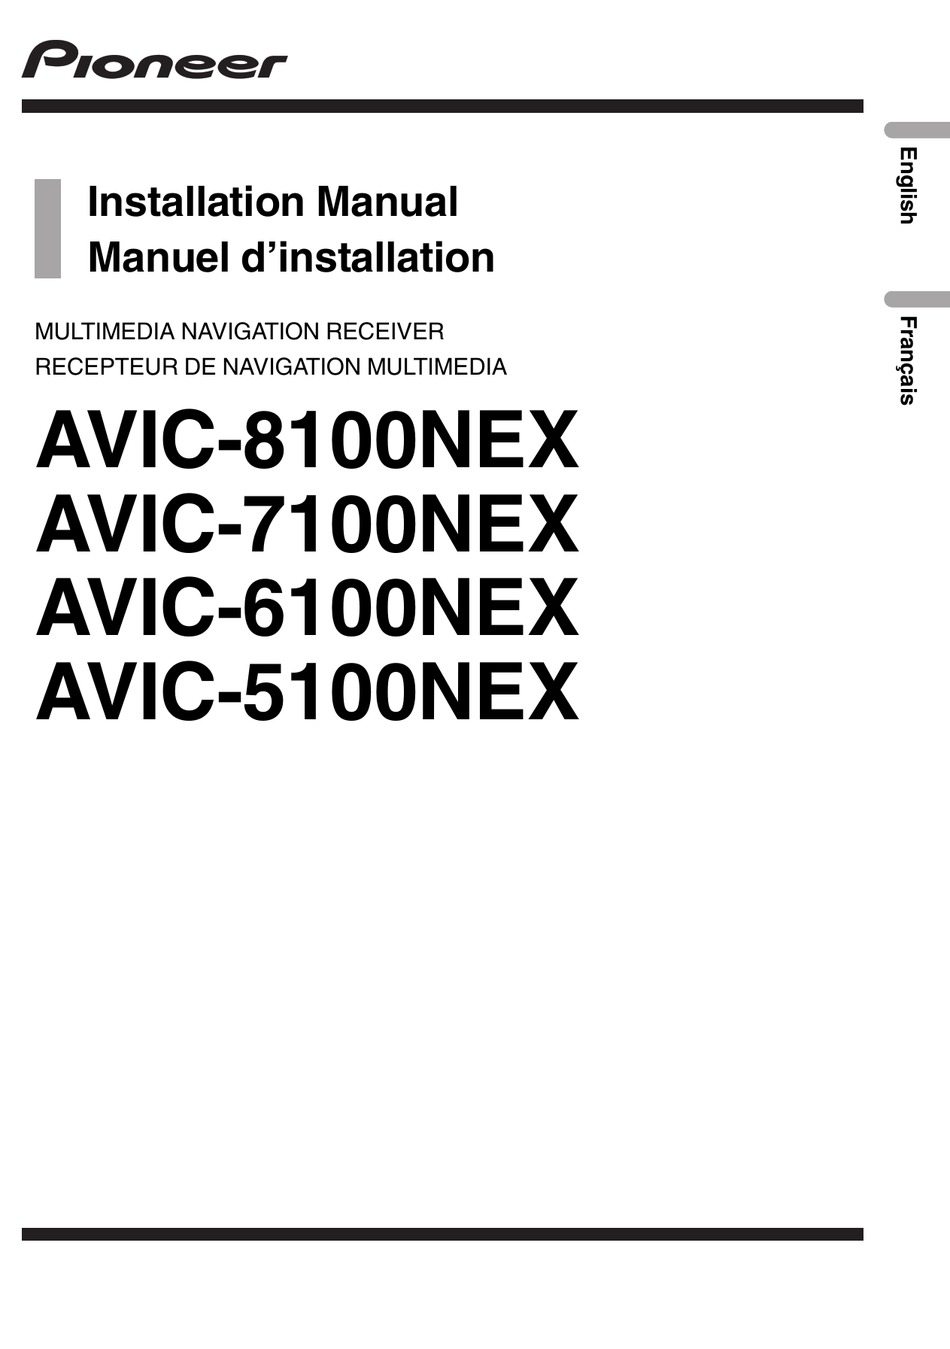 50 Pioneer Avic 5100nex Wiring Diagram - Wiring Diagram Plan